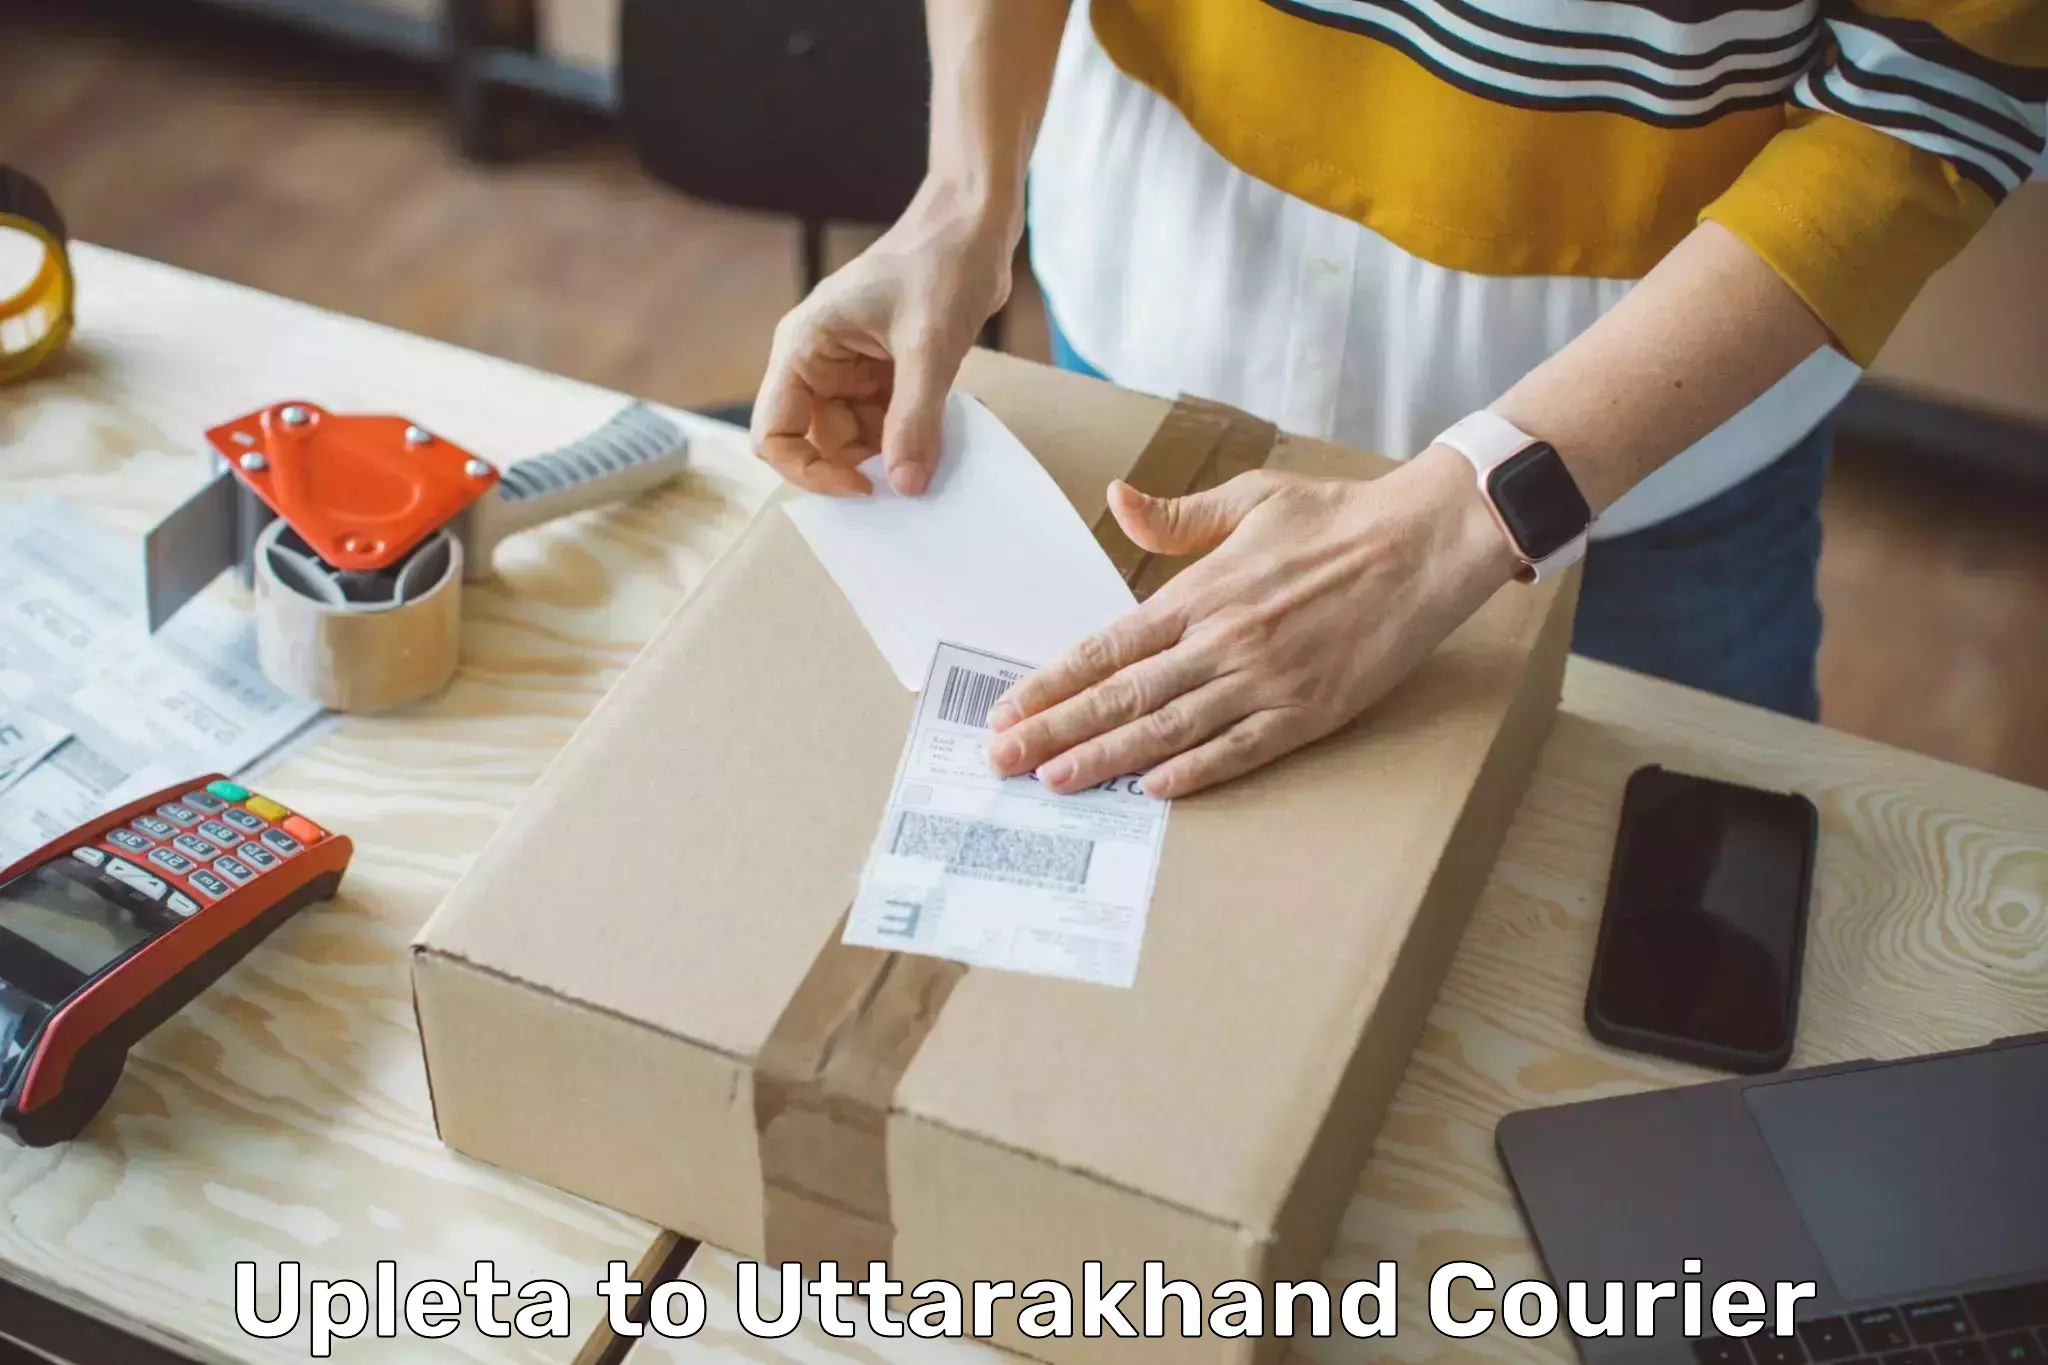 Customer-friendly courier services Upleta to Uttarakhand